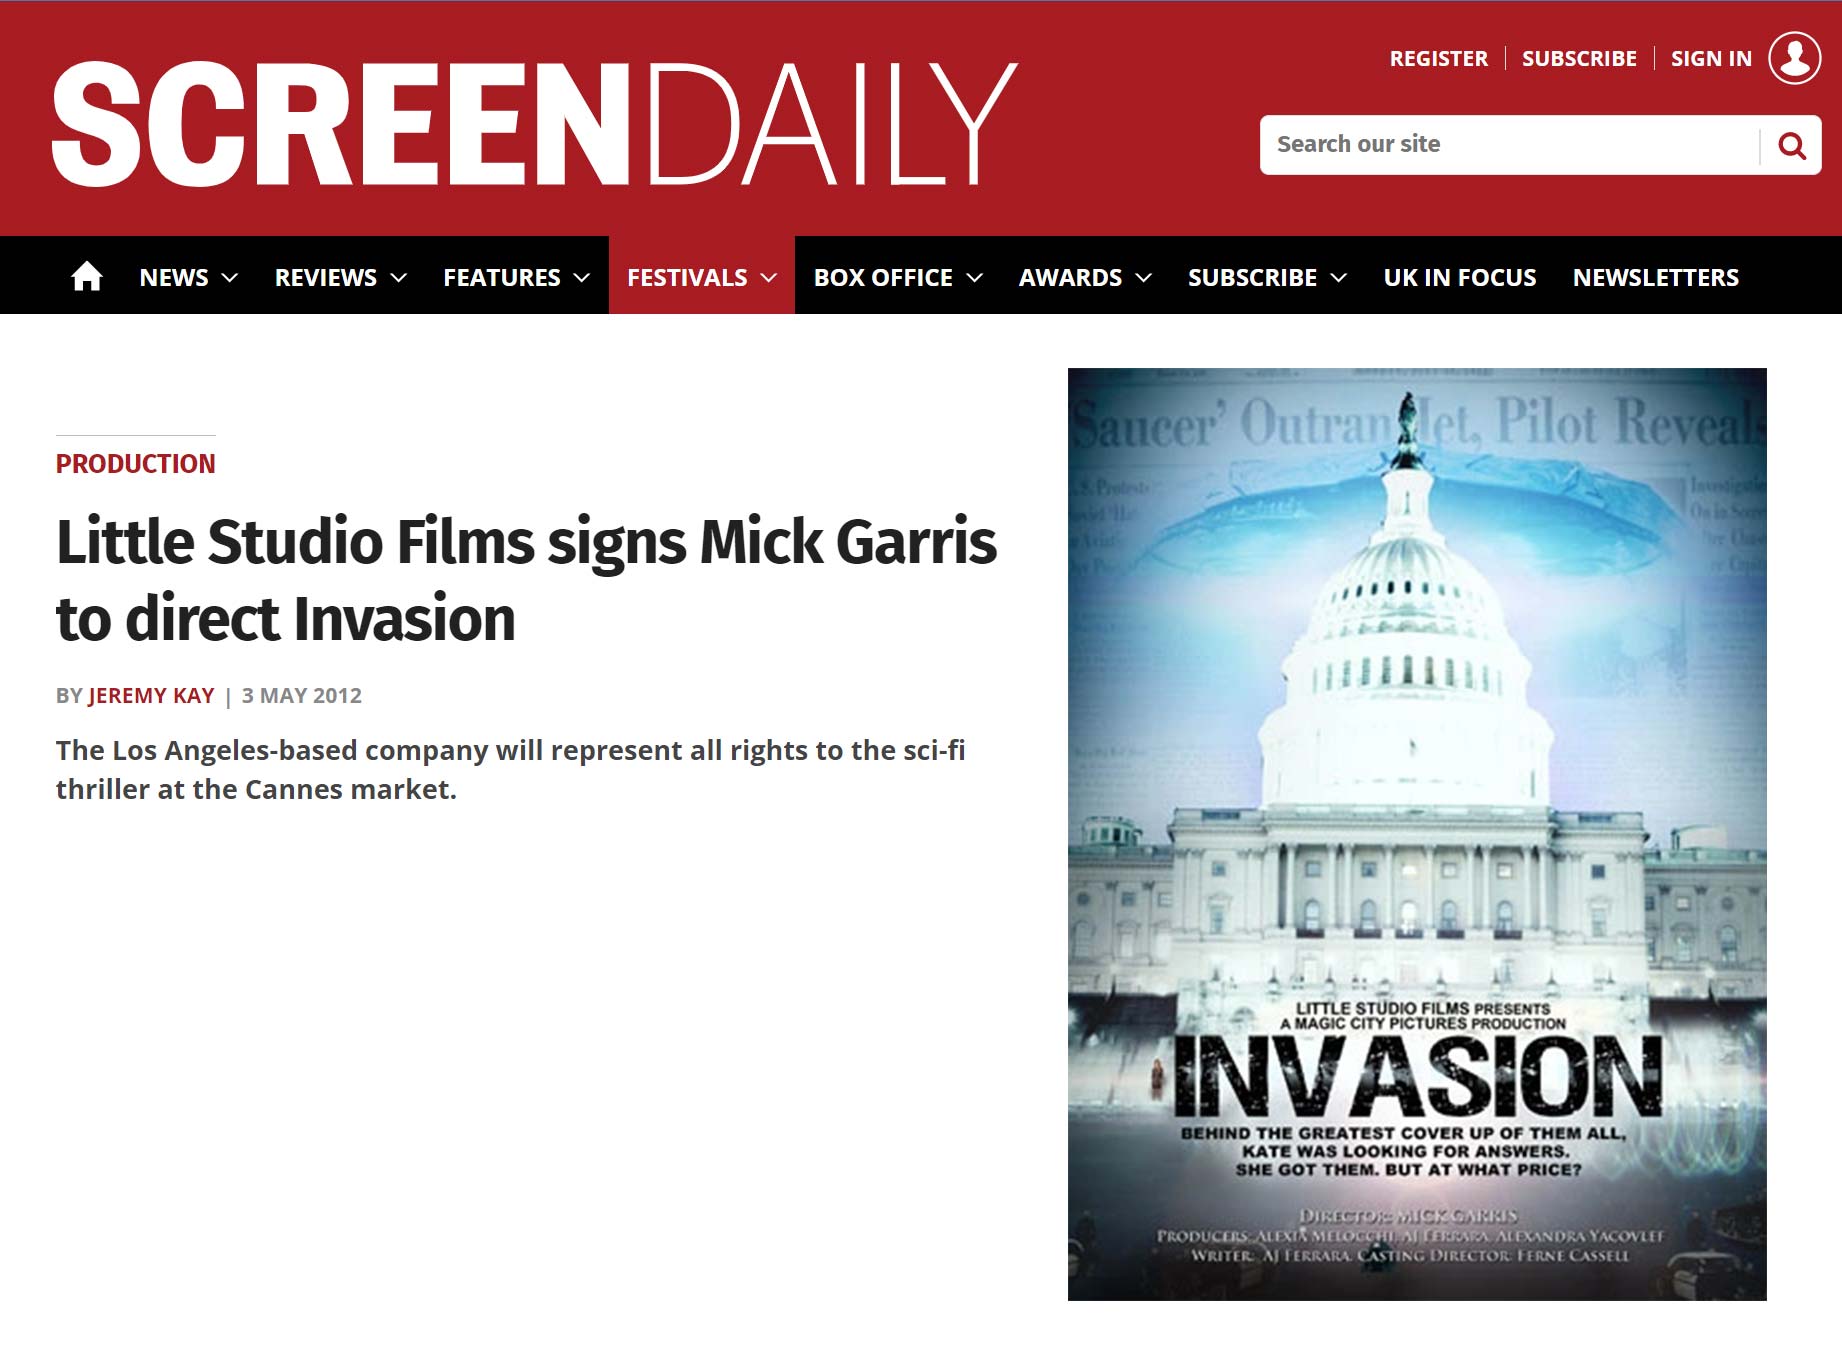 Little Studio Films signs Mick Garris to direct Invasion